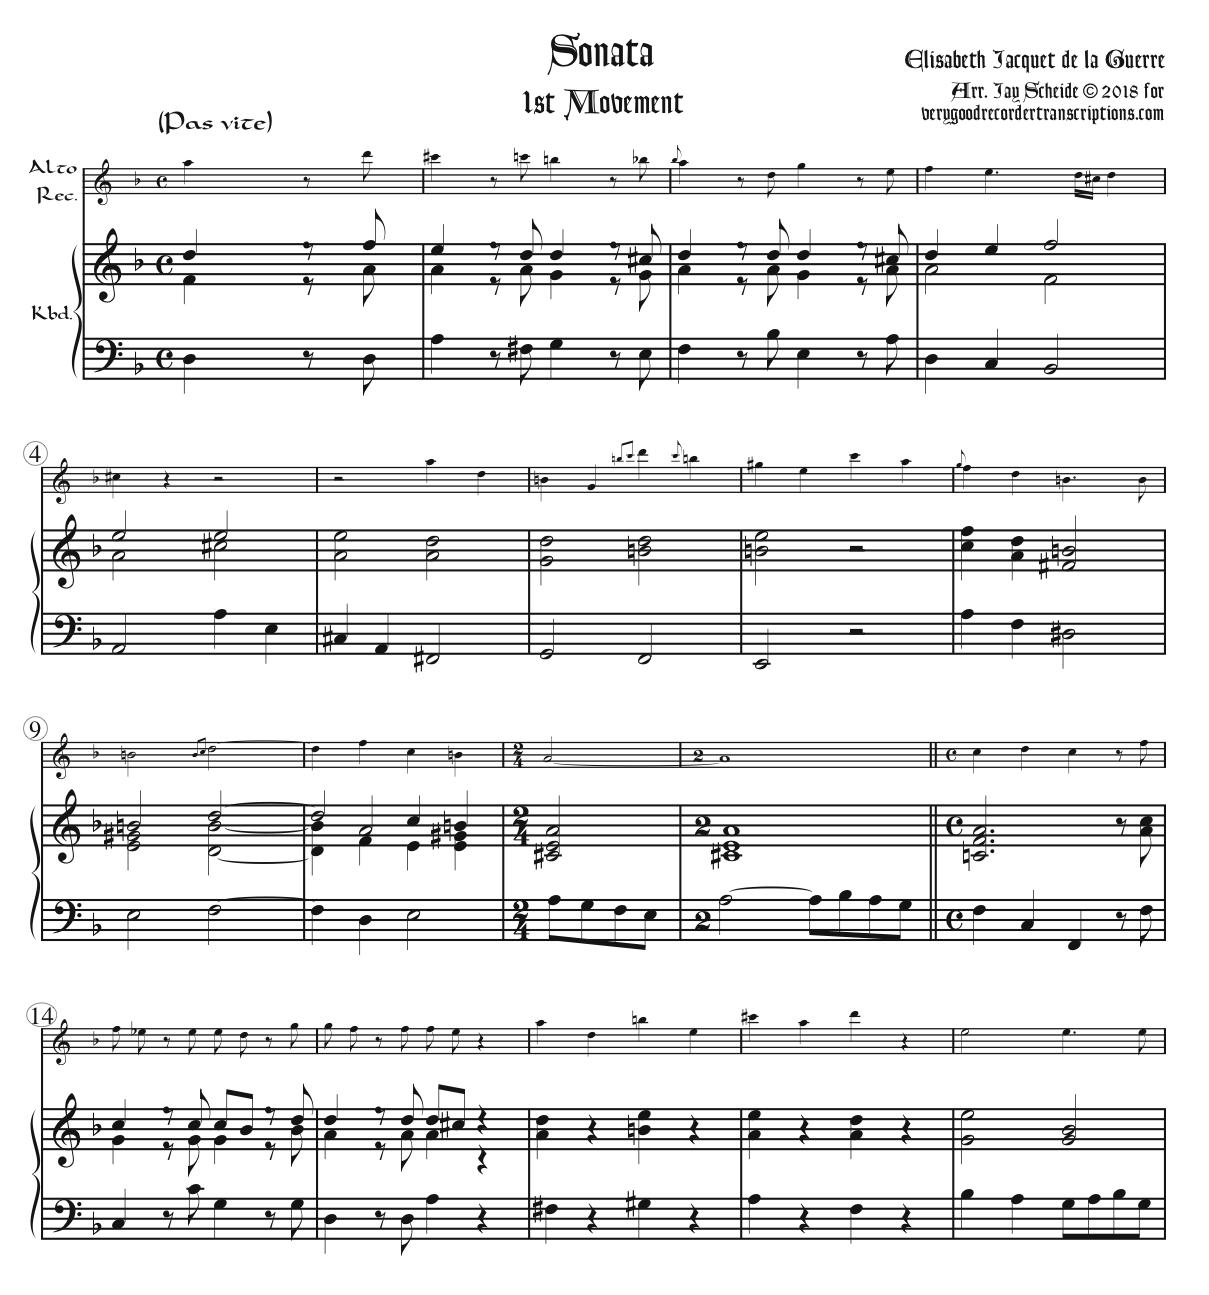 Sonata, 1st Two Mvmts.